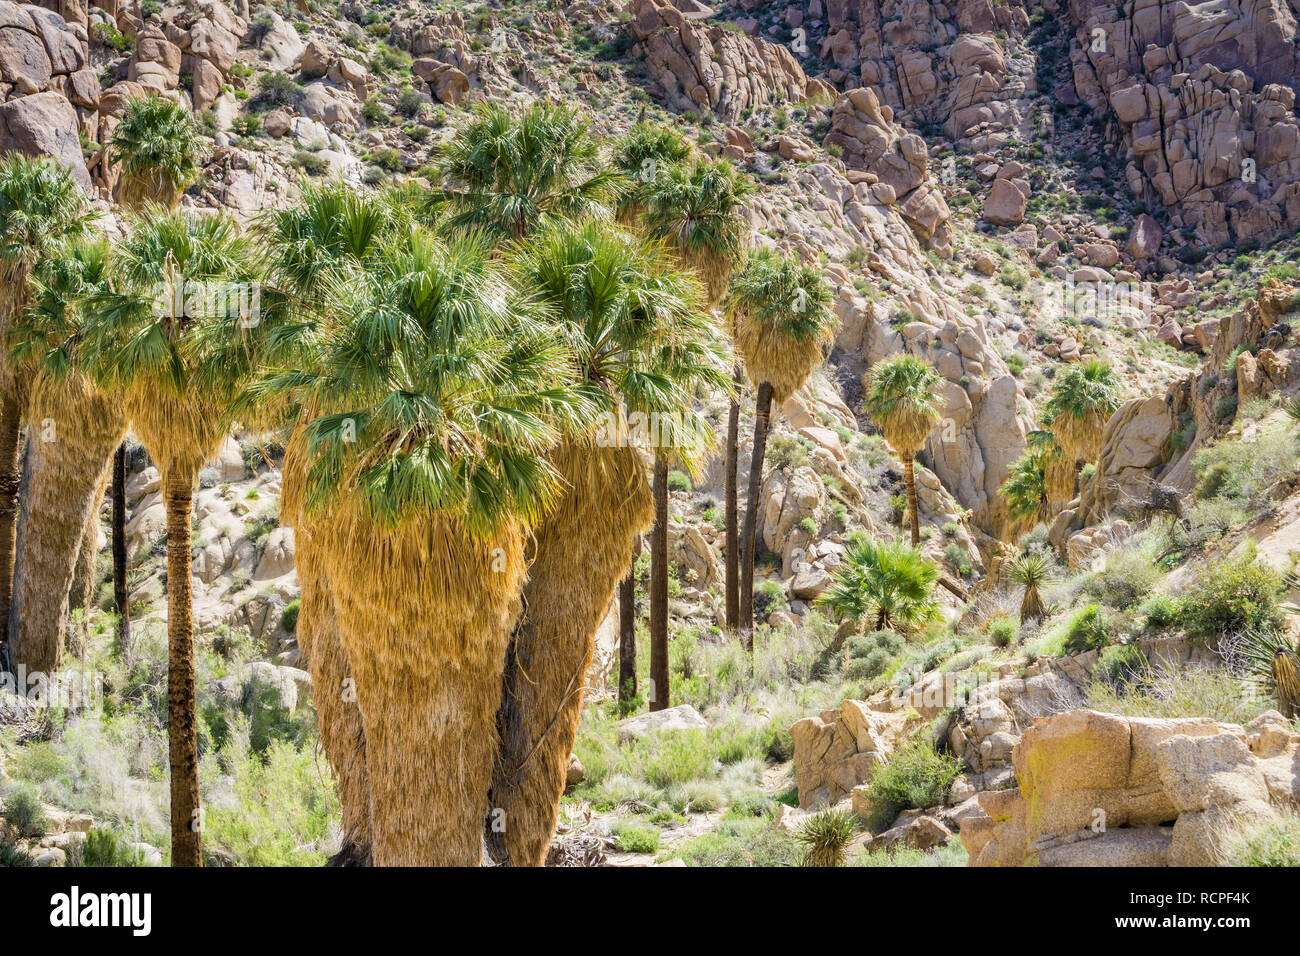 Ventilator Palmen (Washingtonia filifera) in die verlorene Palms Oase, ein beliebter Ort zum Wandern, Joshua Tree National Park, Kalifornien Stockfoto